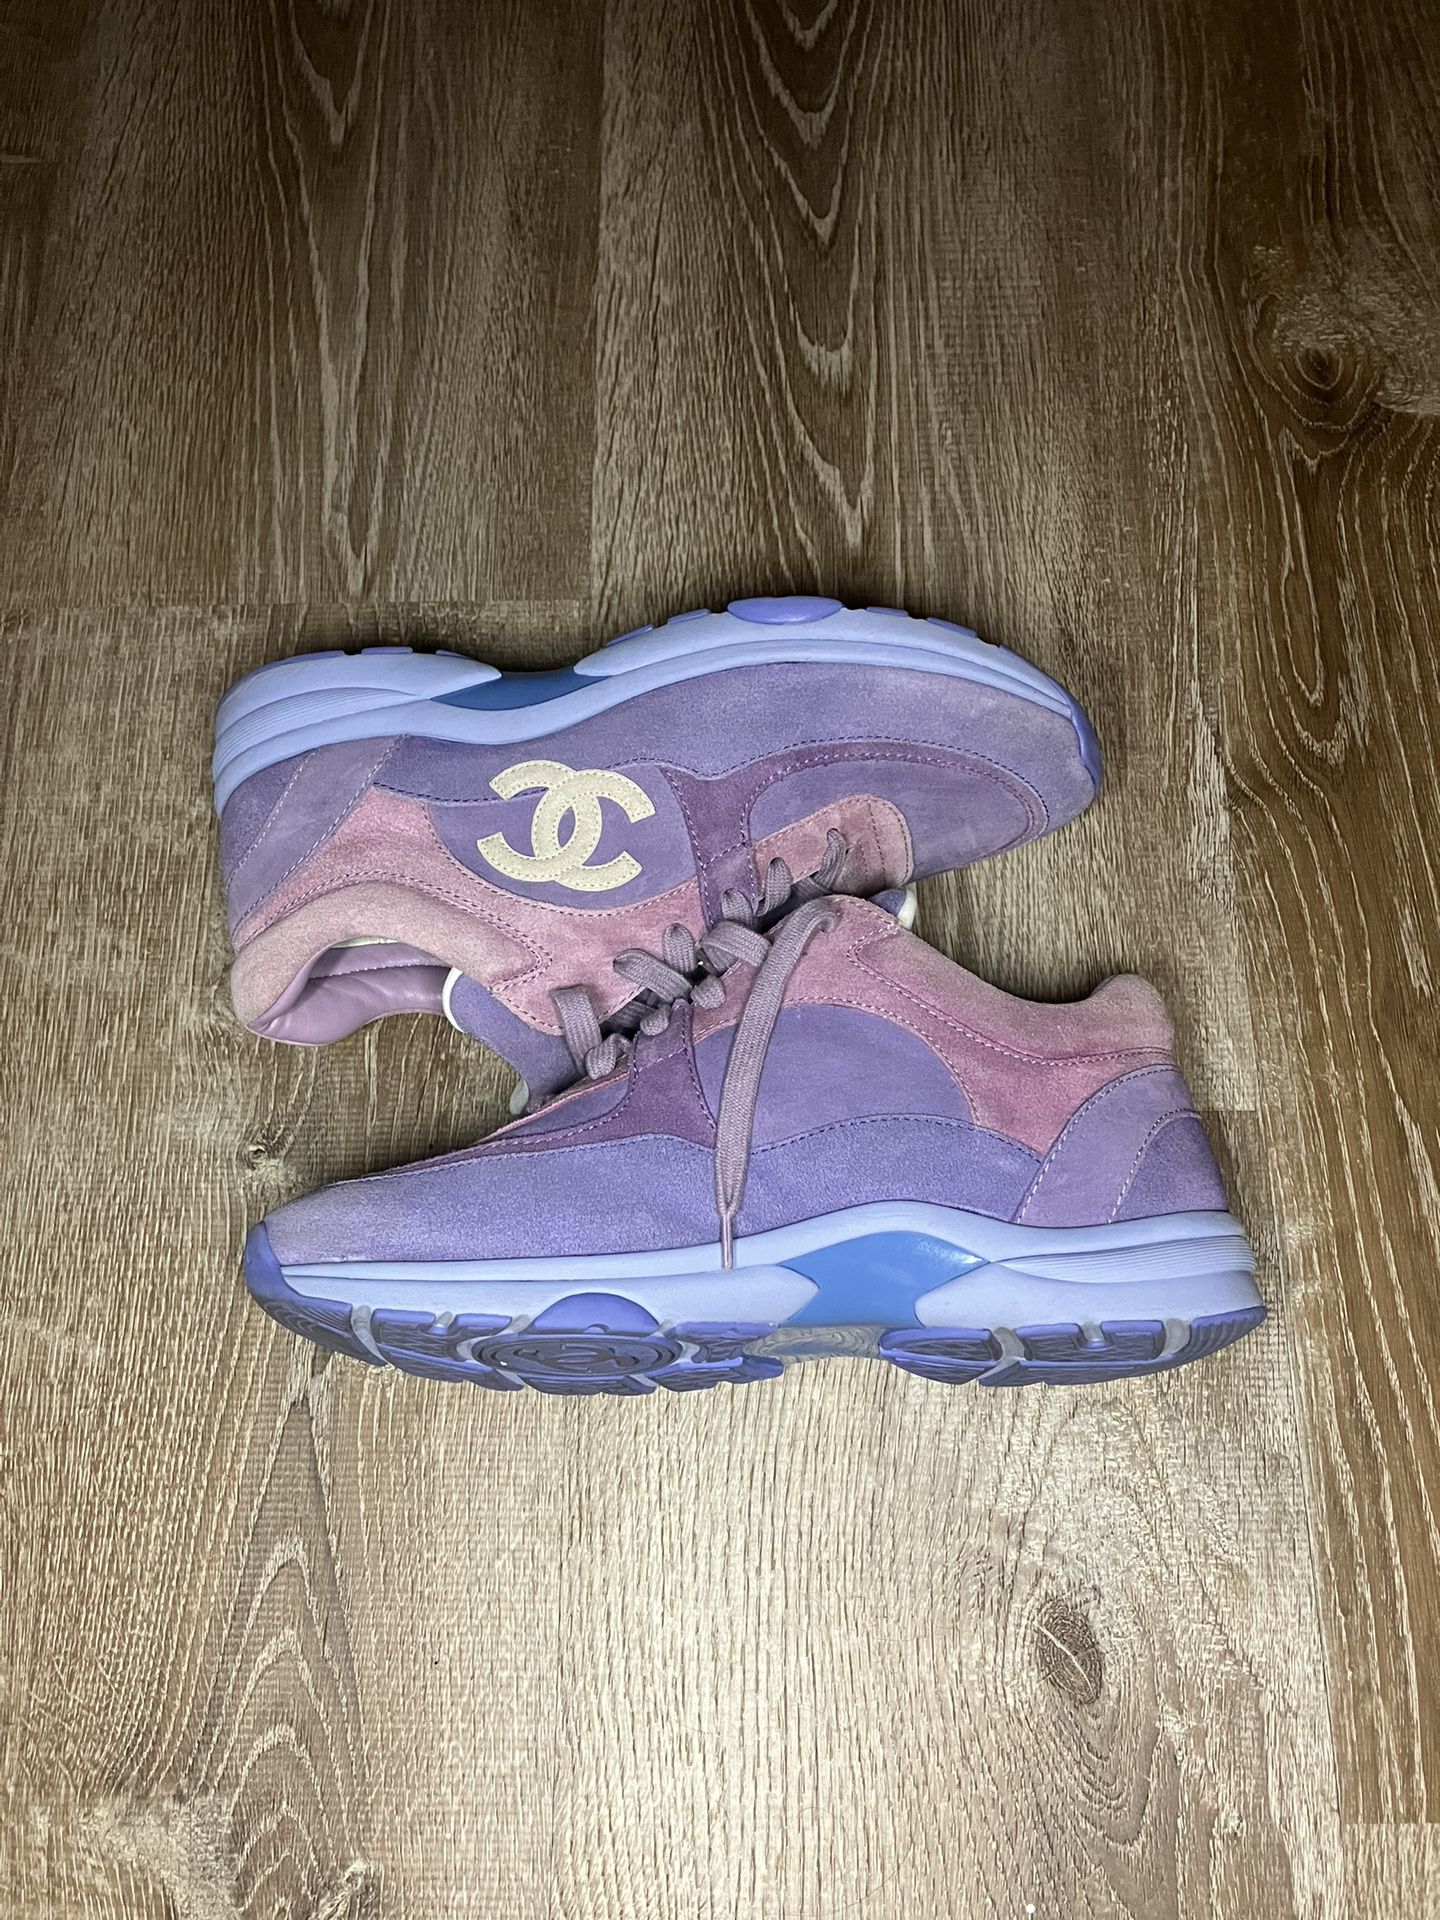 Chanel Sneakers Purple Suede- Size 40